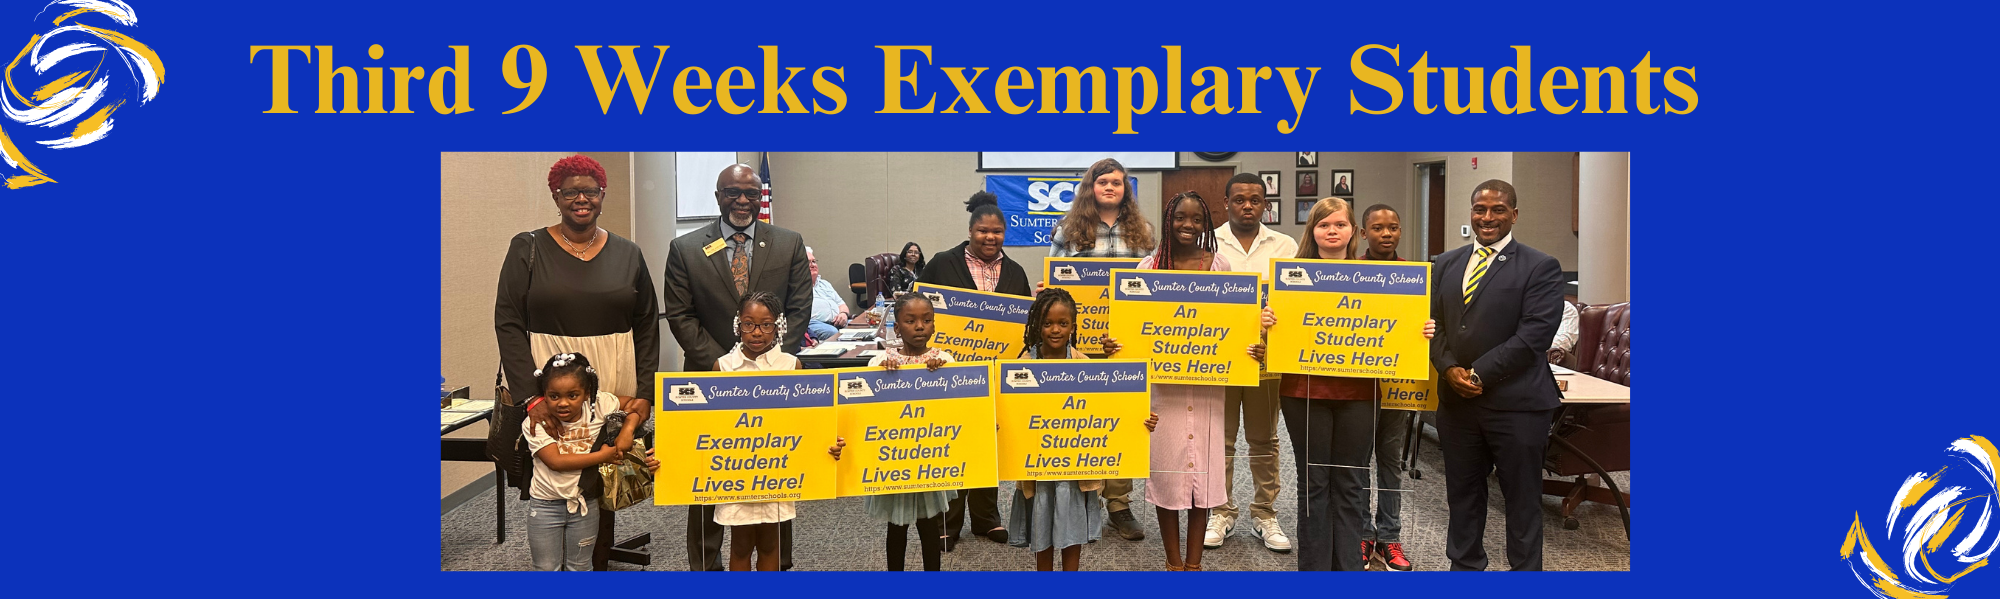 Third Nine Weeks Exemplary Students